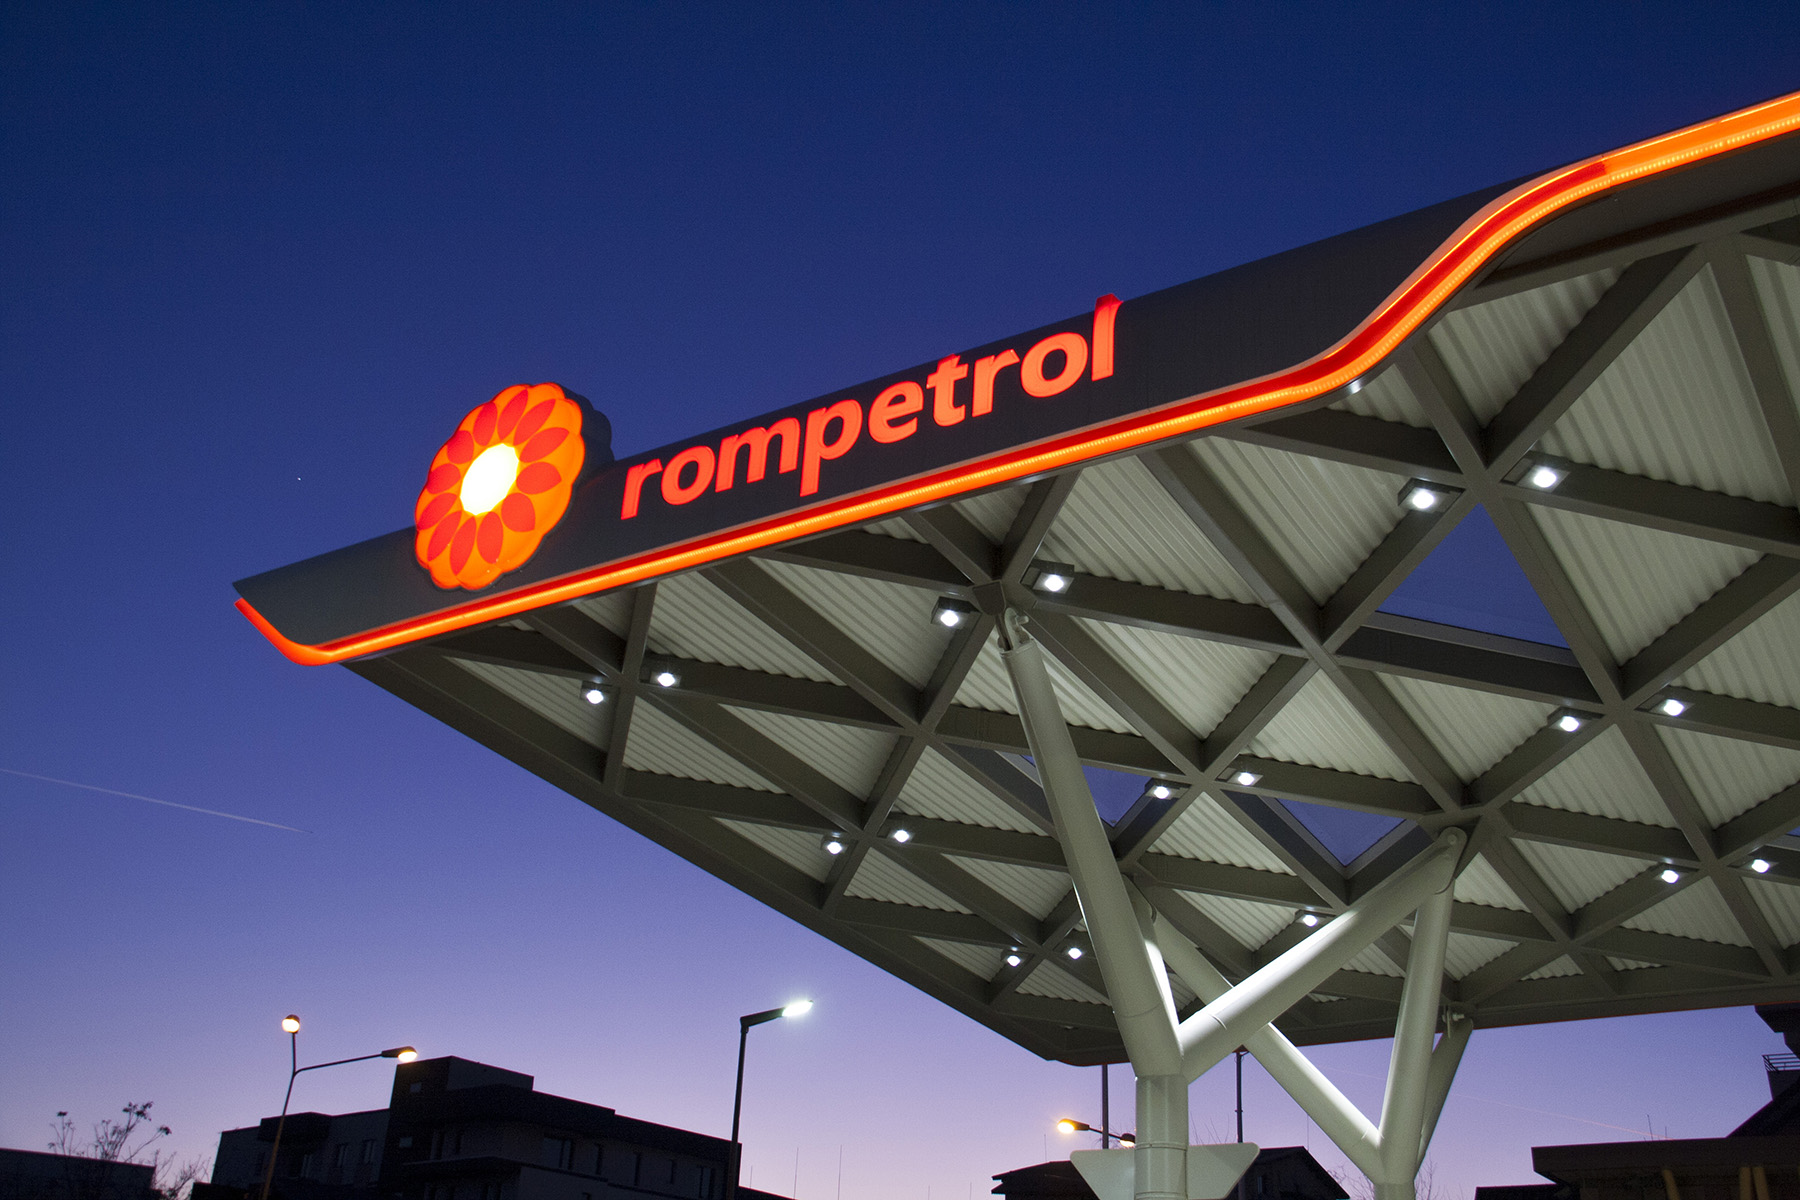 Фриз навеса автозаправочной станции Rompetrol